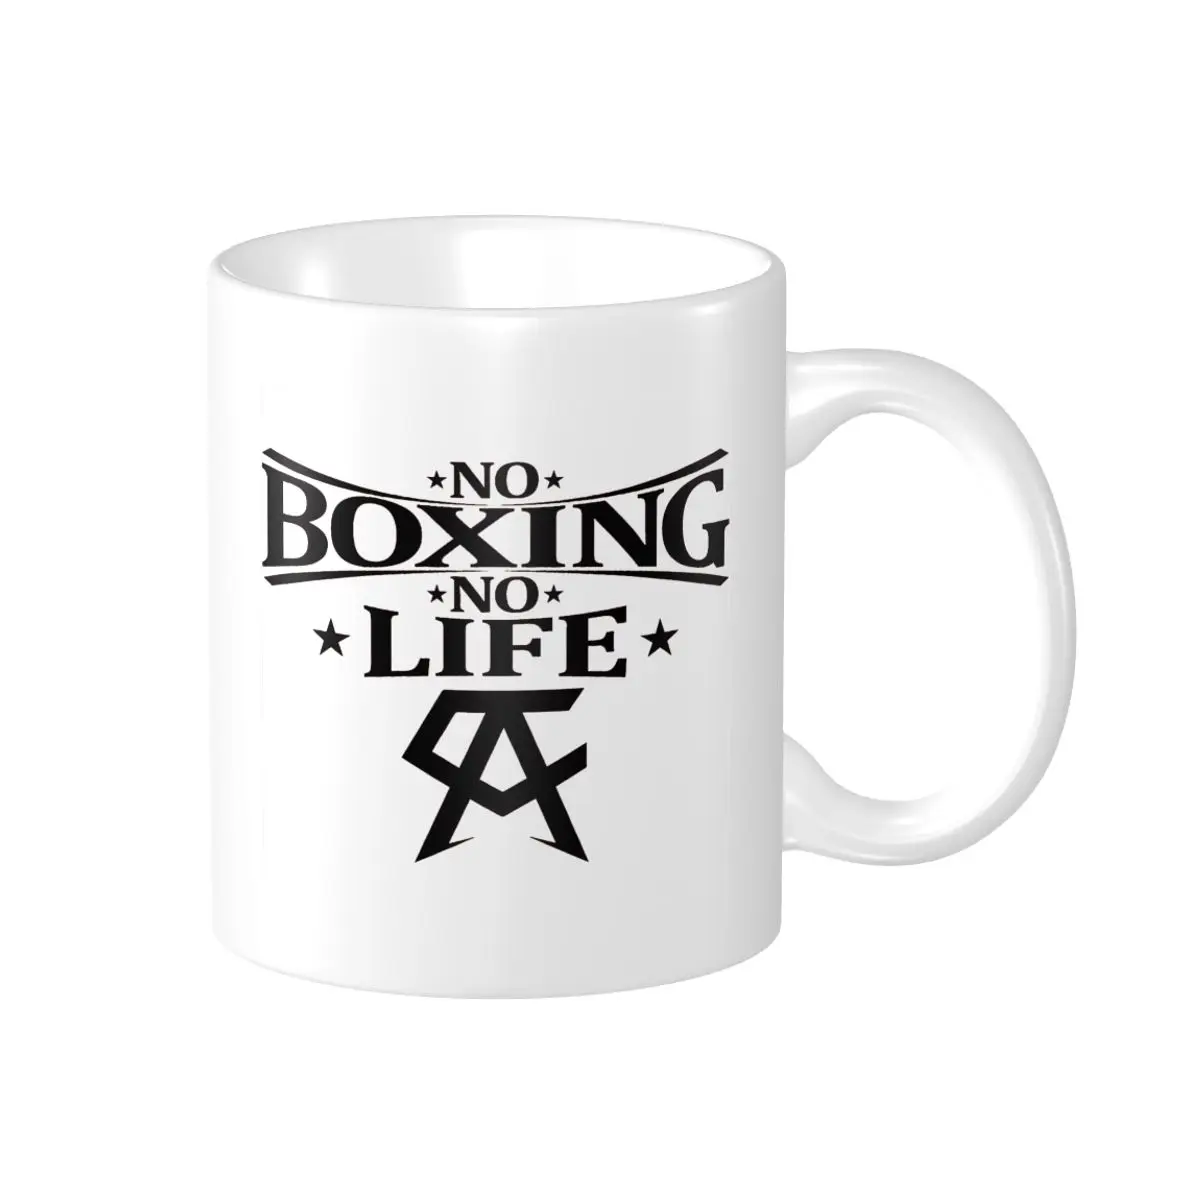 

Promo Canelos Alvarez No Boxing No Life Essential Mugs Graphic Vintage Cups CUPS Print Humor R257 multi-function cups